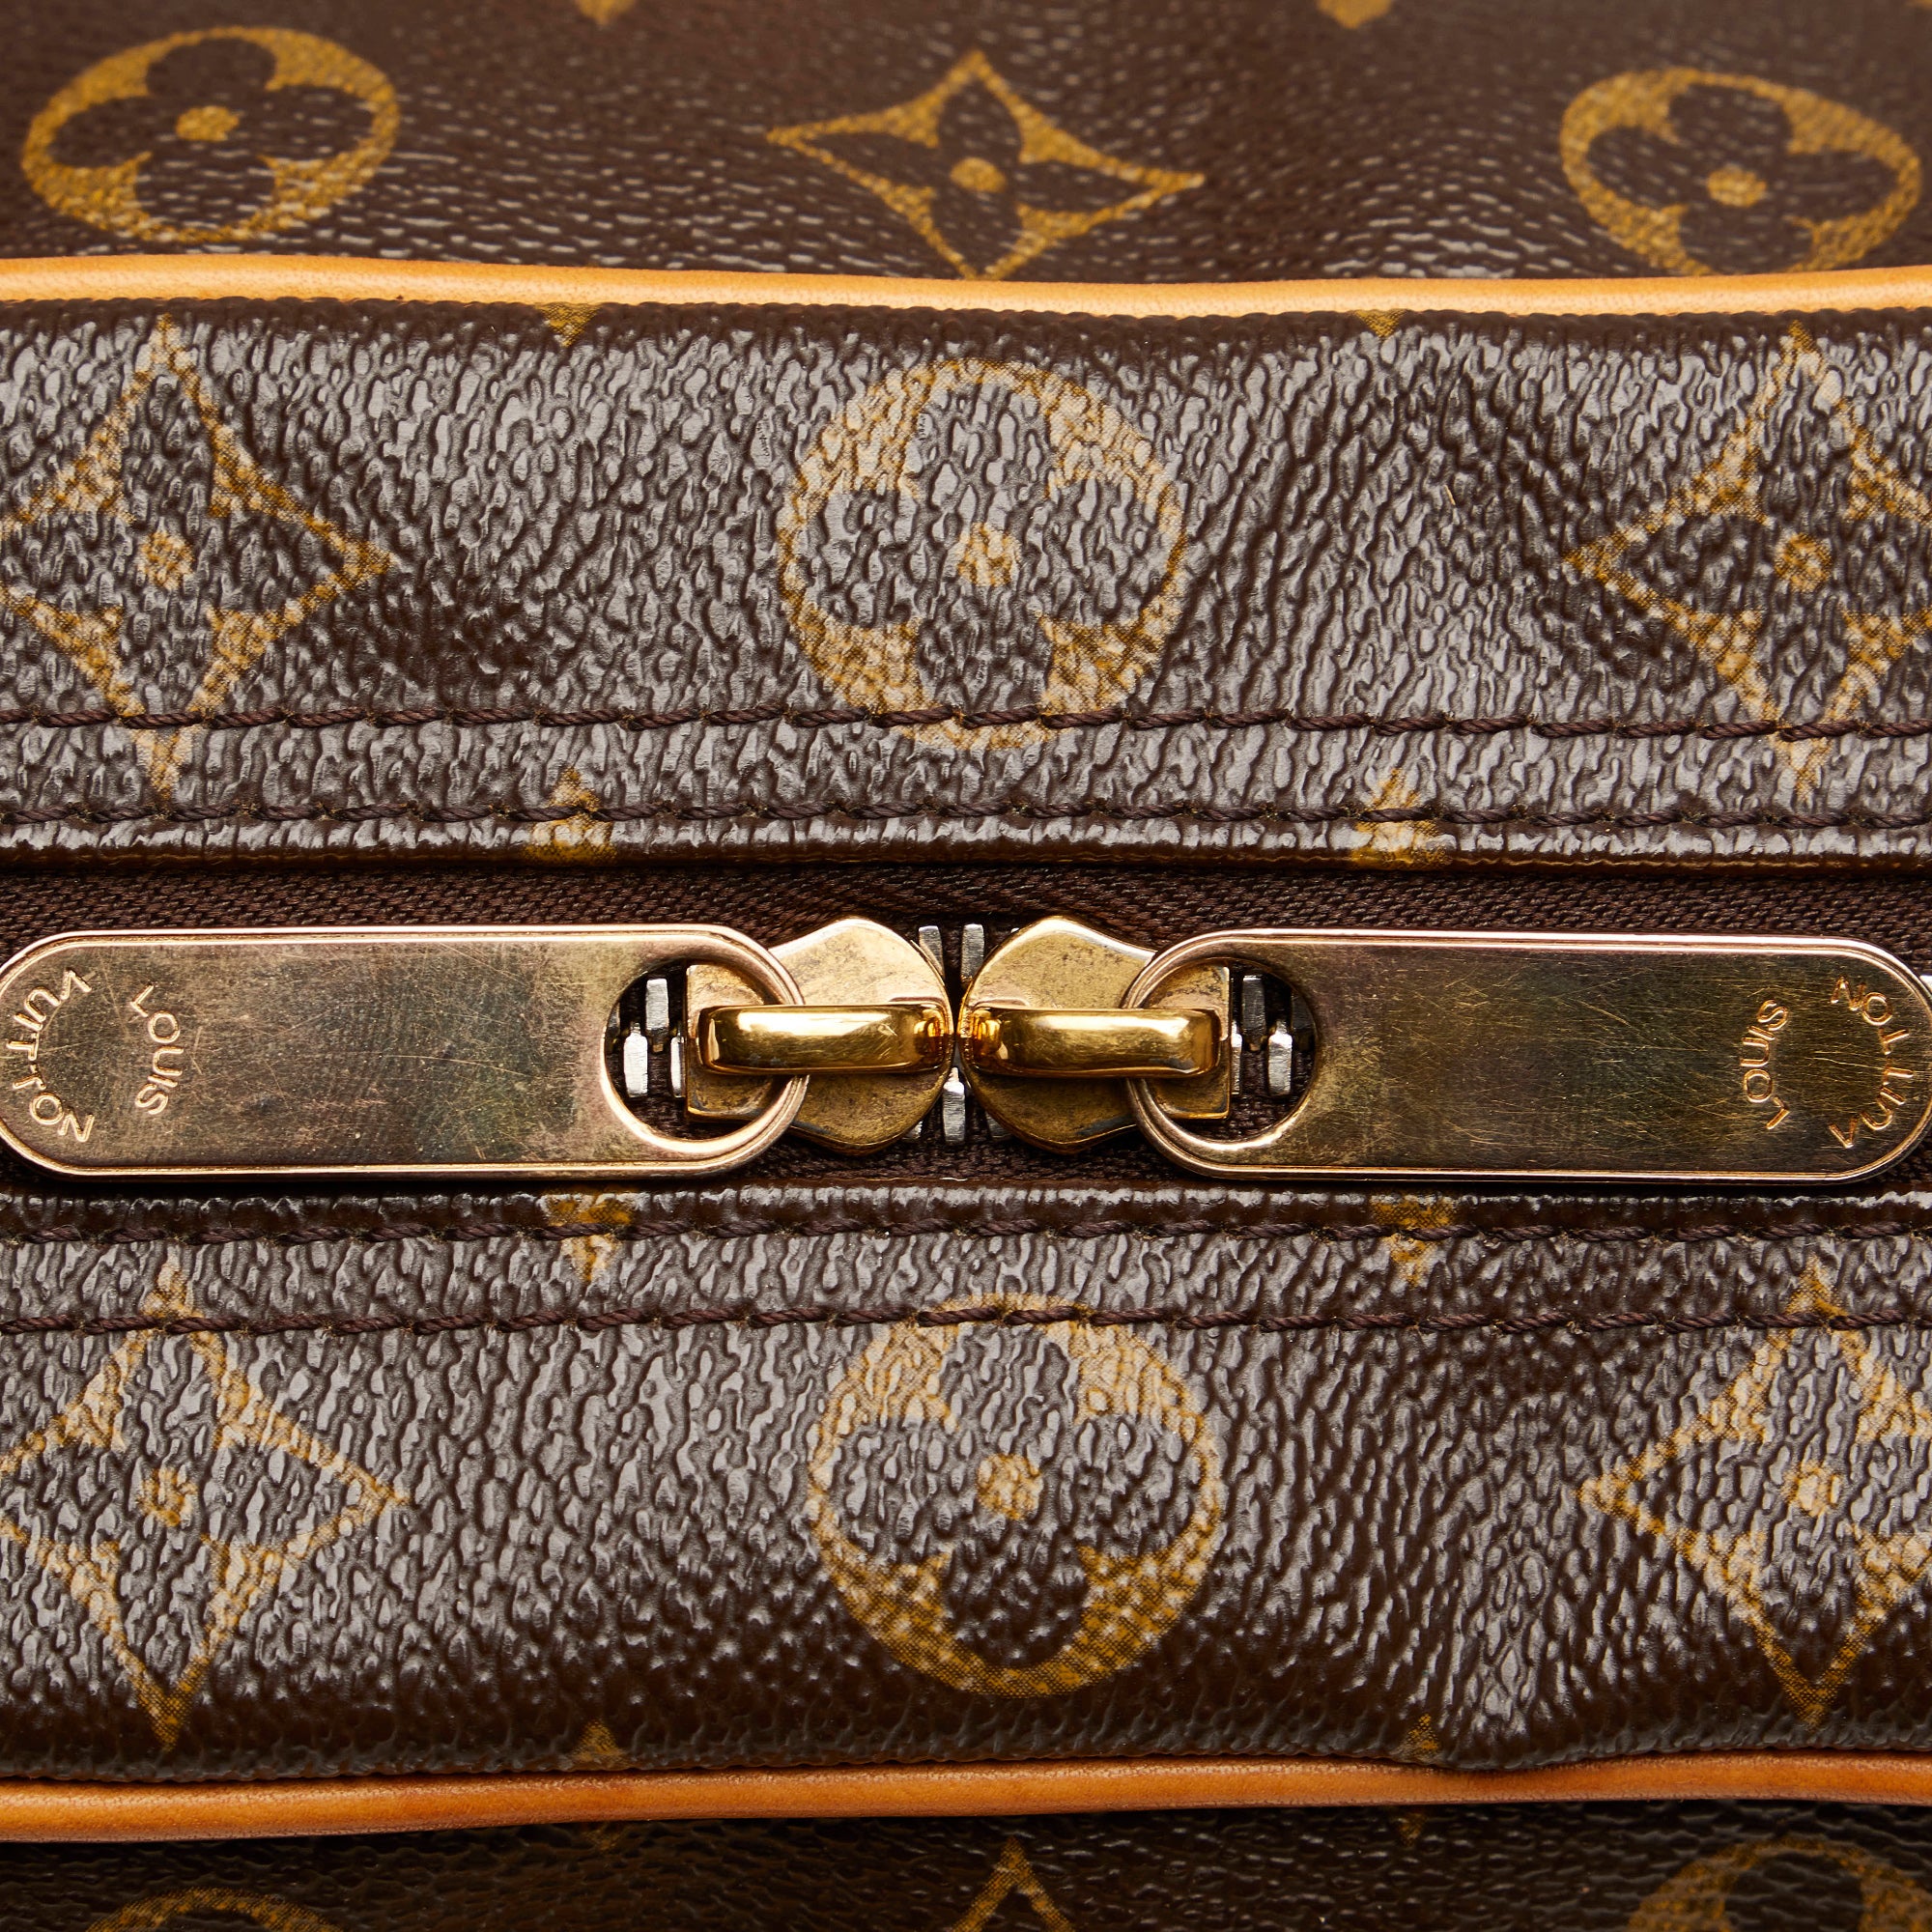 Manhattan leather handbag Louis Vuitton Brown in Leather - 21008684